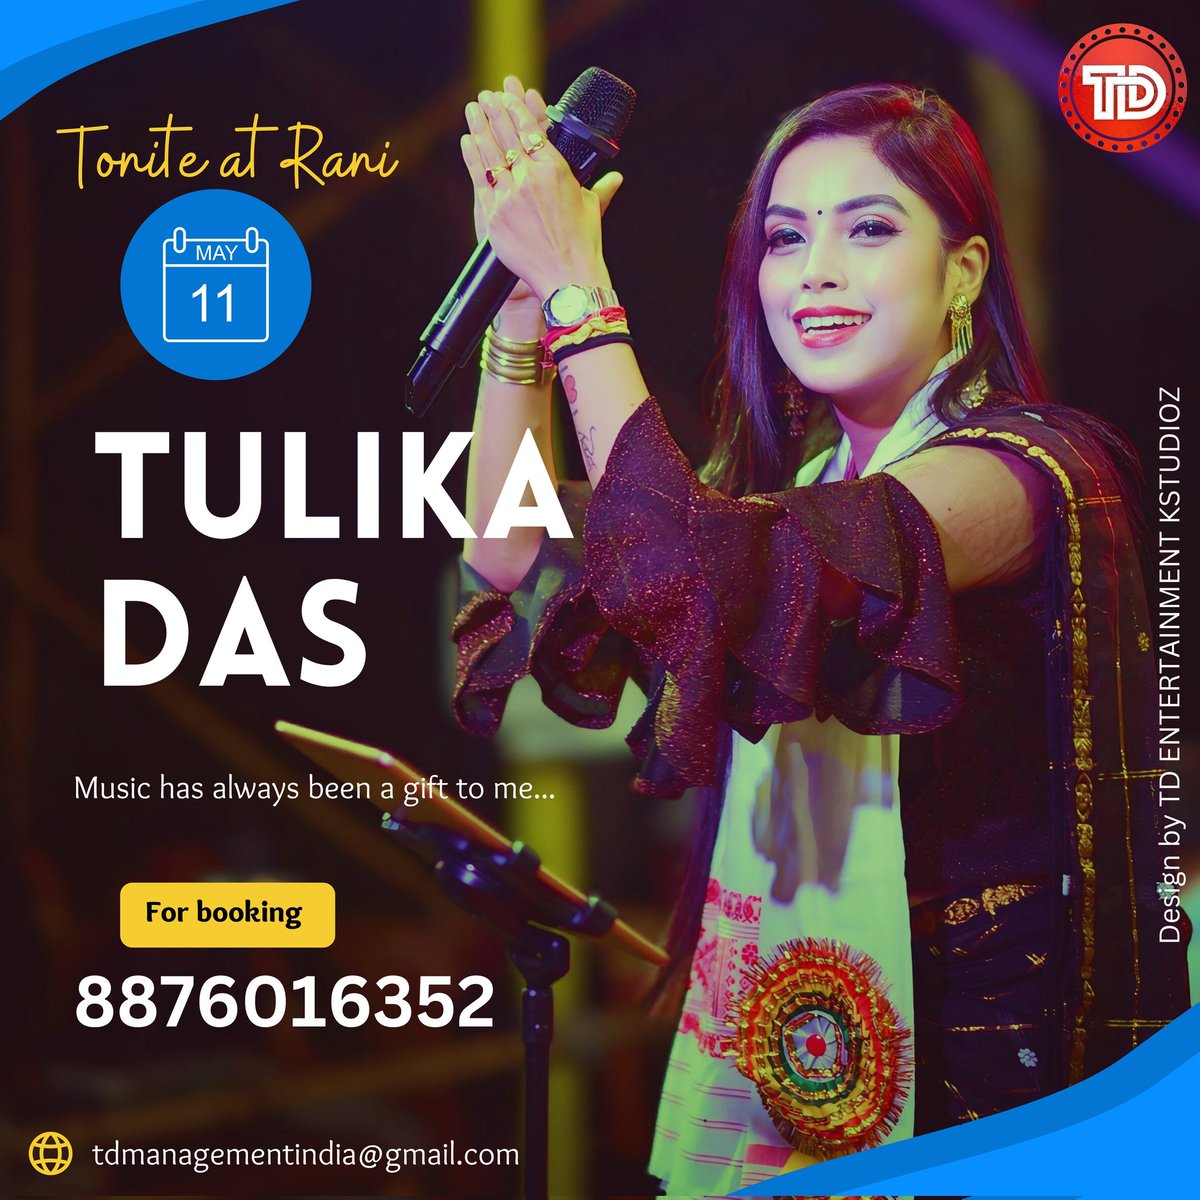 Rani Sajjanpara ❤️
See you all tonight ✨
********
#tulikadasfam #singertulika #actortulika #TD #TDEntertainmentKStudioz #trendingpost #viralit #artist #singerlife #assamese #music #TulikaDas_Live #ThéDansantBand #TD_Live #highlight #tulika #LiveMusic #follow